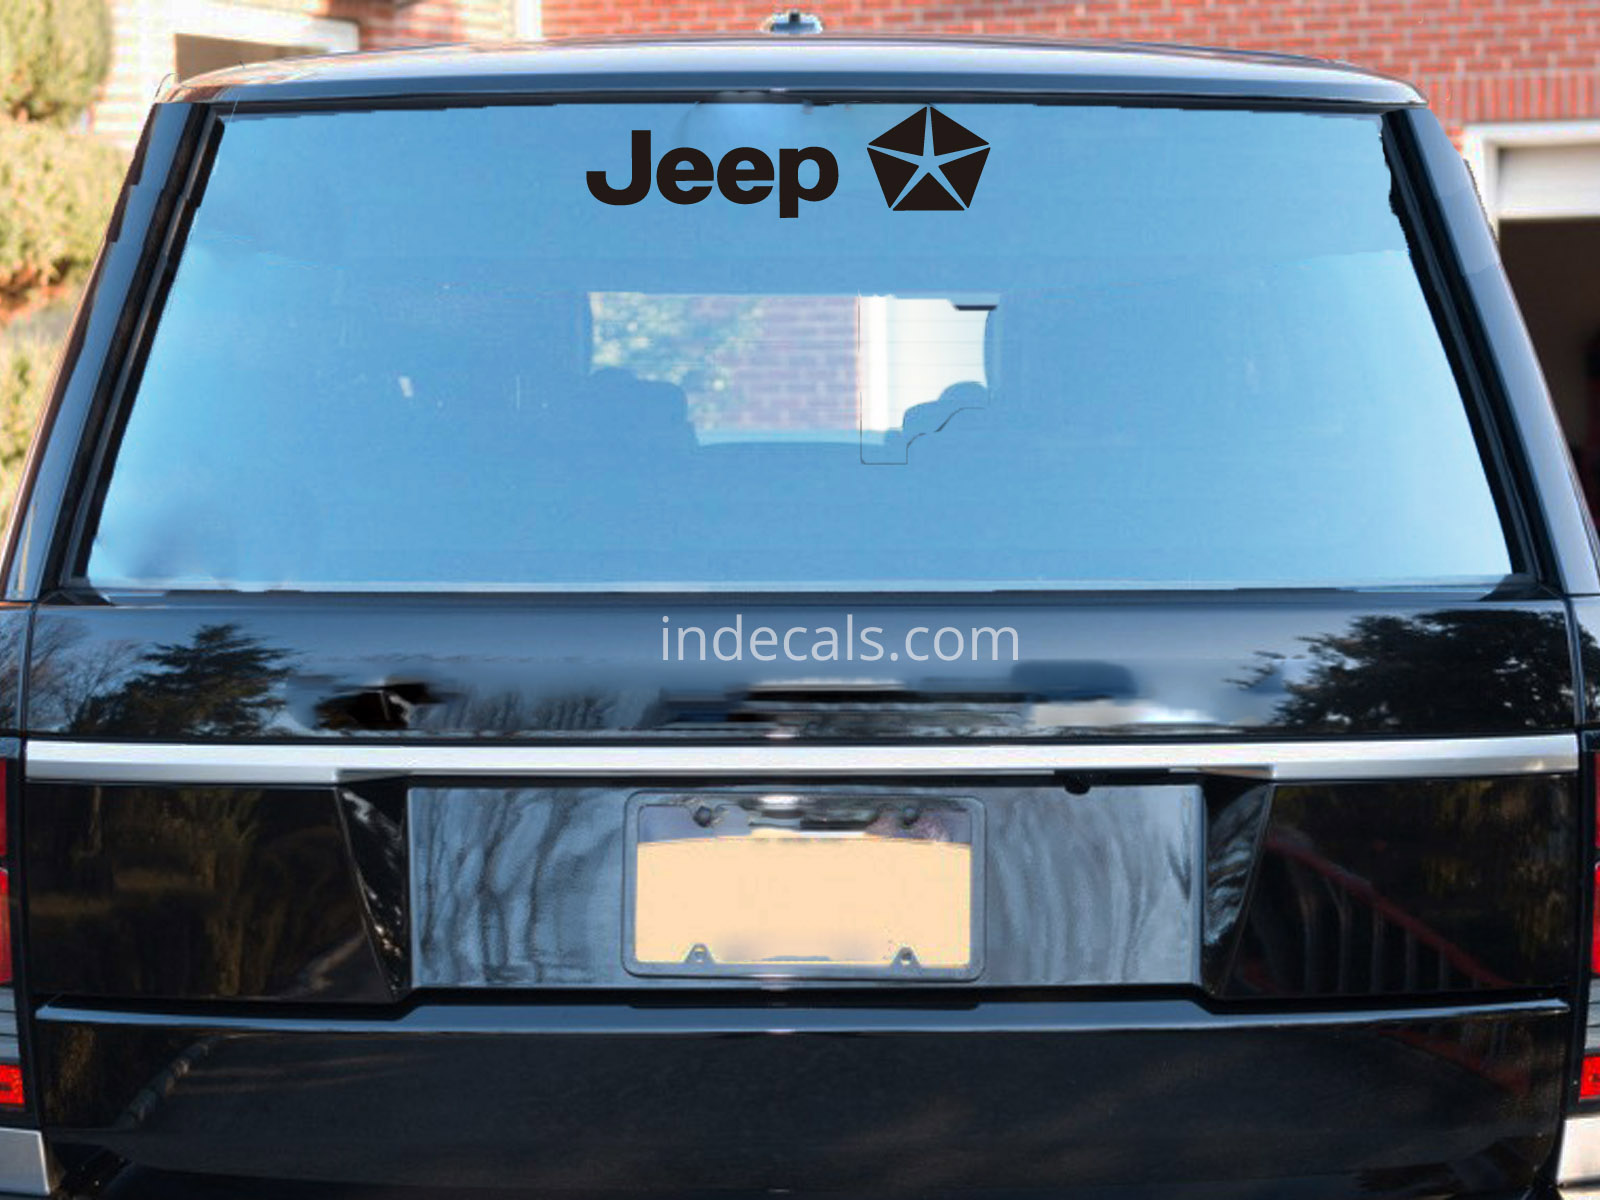 1 x Jeep Sticker for Windshield or Back Window - Black